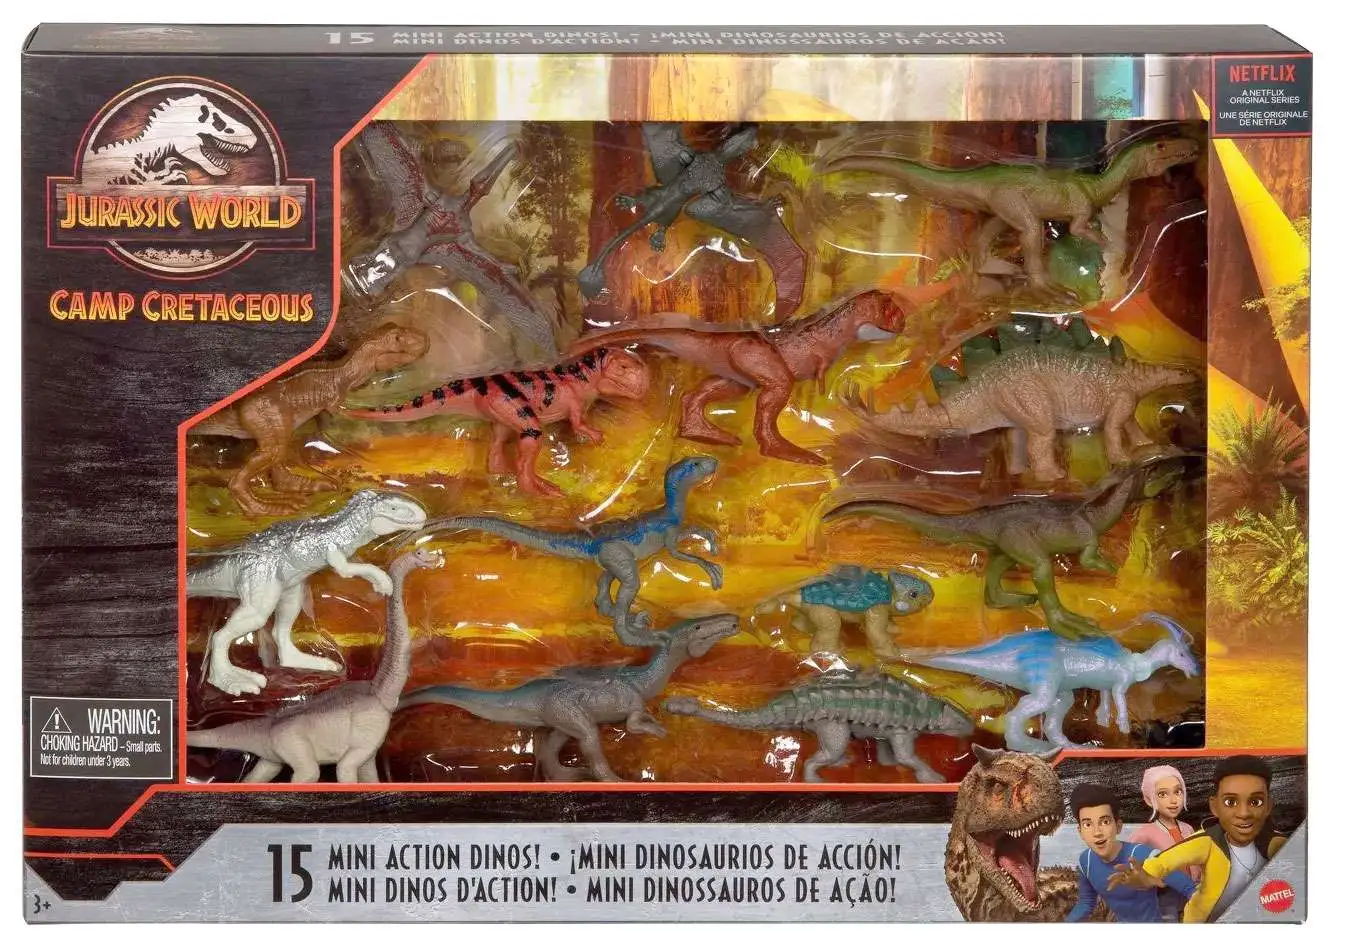 Jurassic World Camp Cretaceous Mini Action Dinos! Exclusive Mini Figure 15-Pack